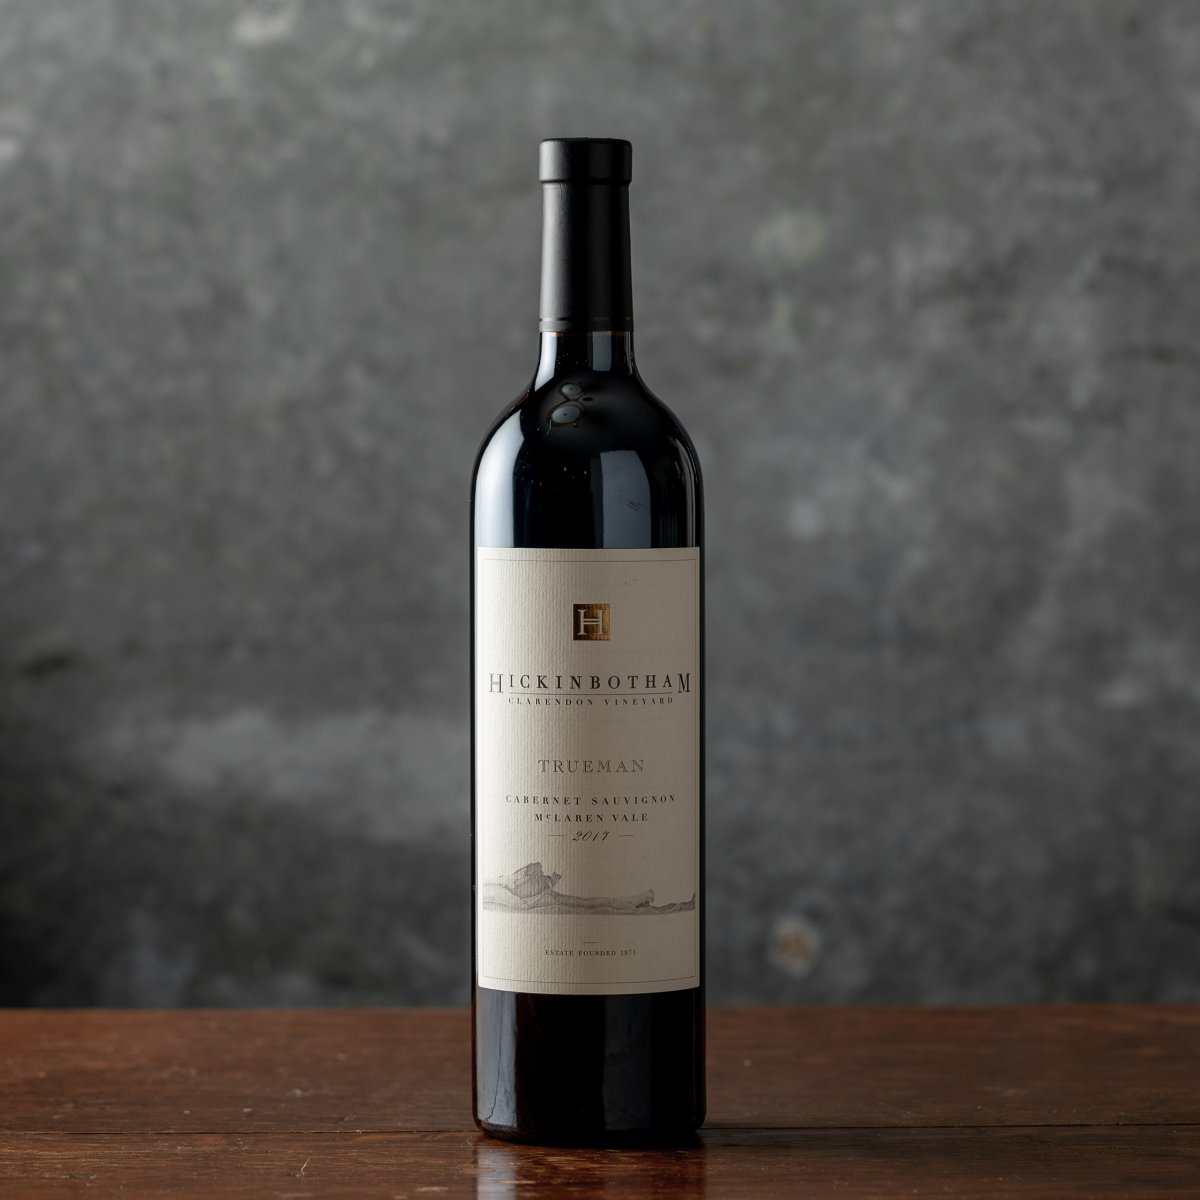 Wine bottle of Trueman Cabernet Sauvginon against a gray backdrop